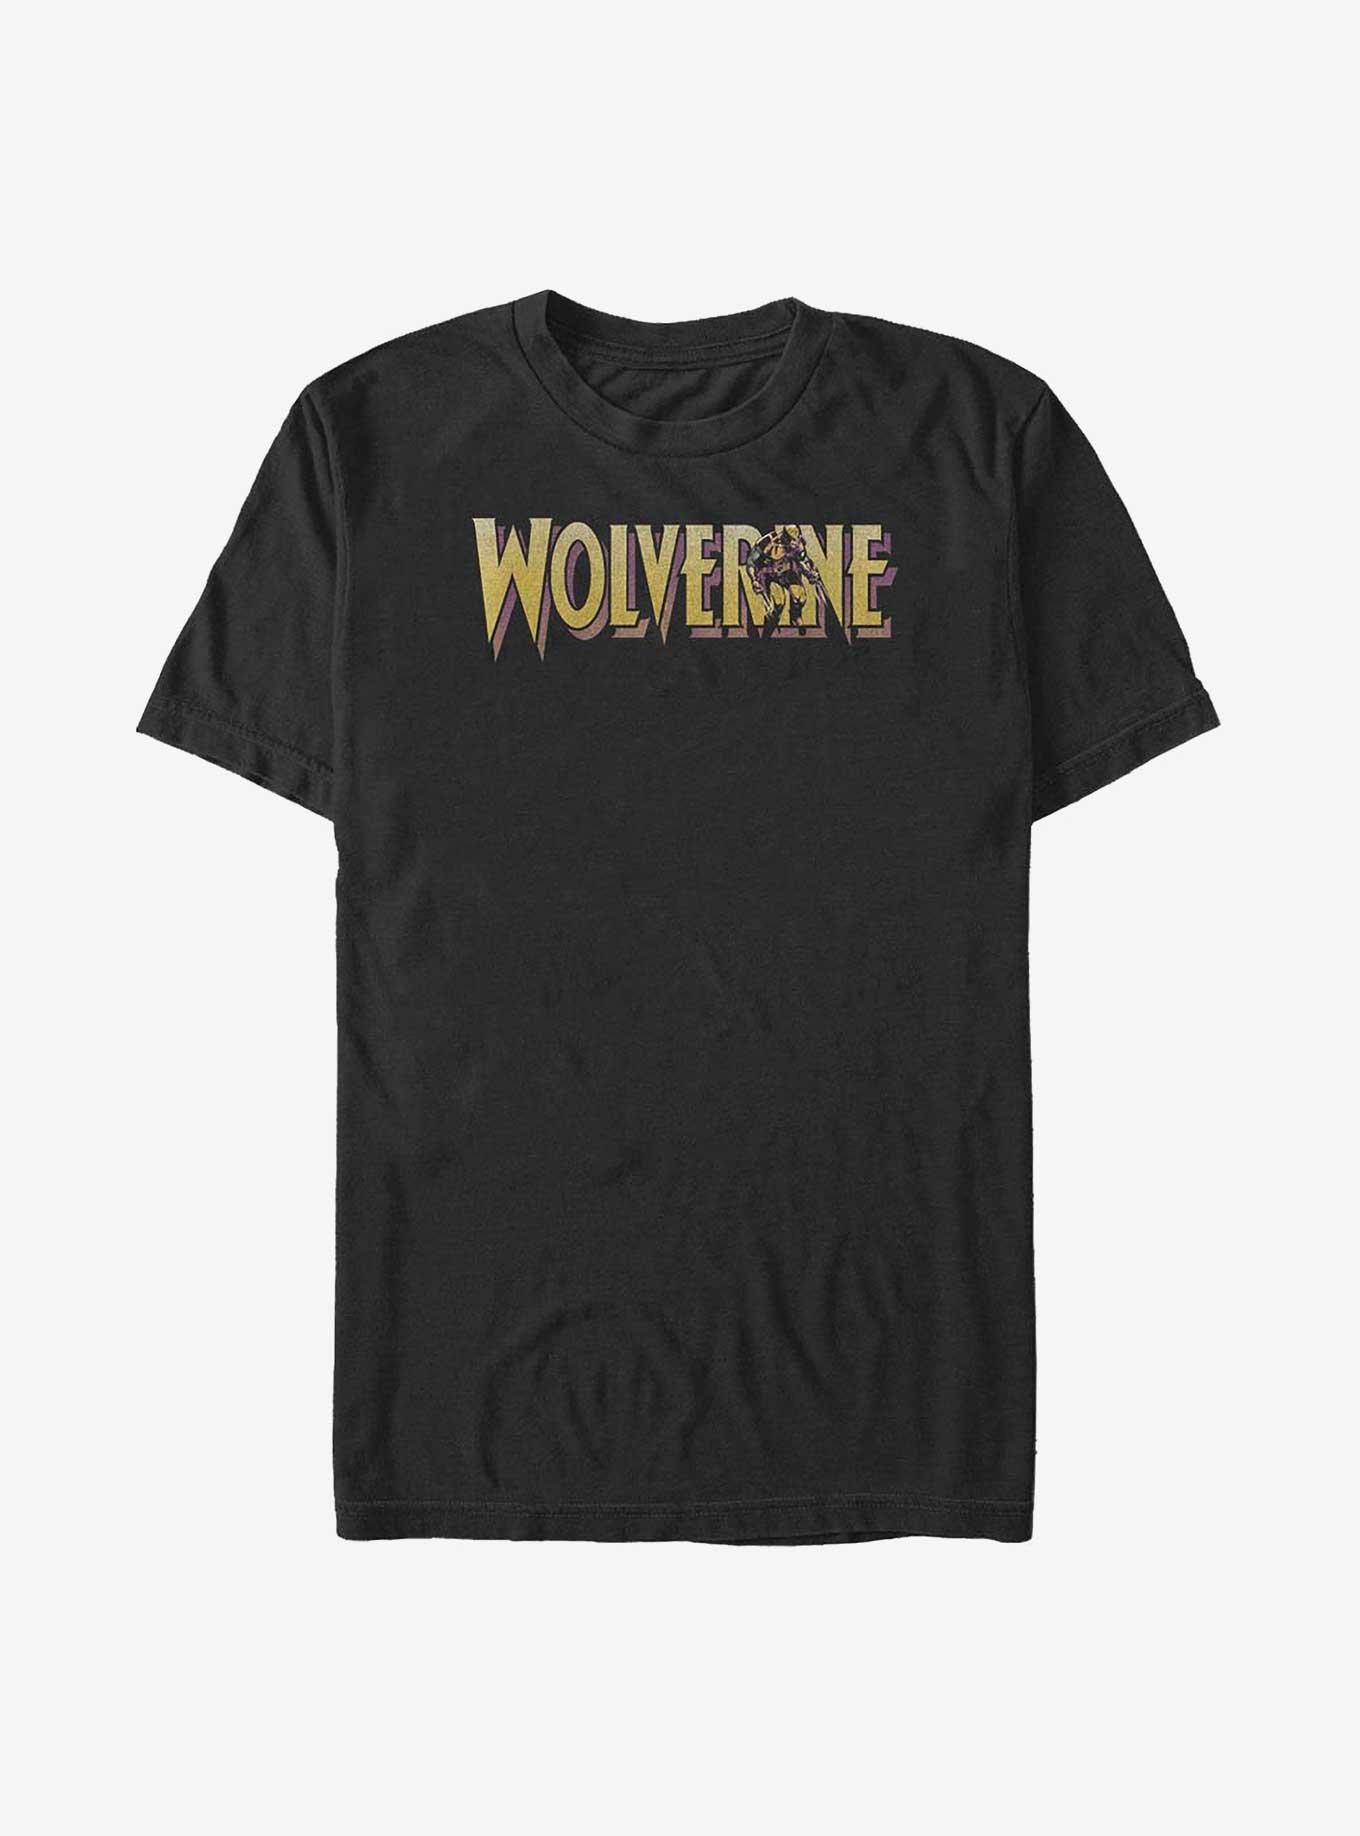 Wolverine Wolverine Logo Big & Tall T-Shirt, BLACK, hi-res